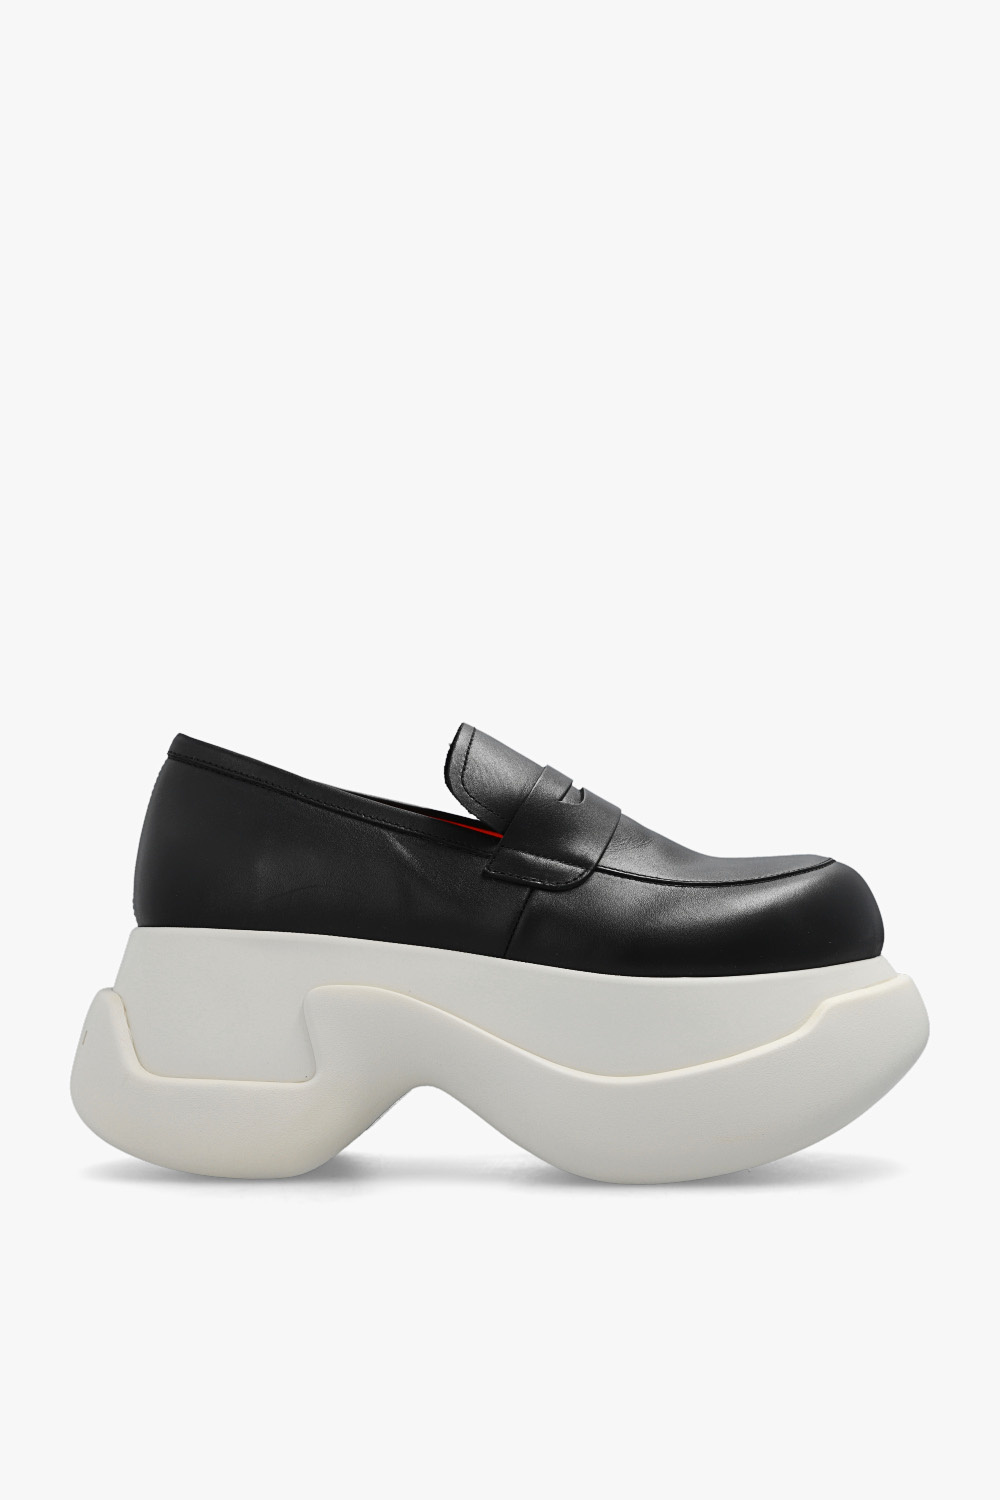 Marni ‘Aras 23’ platform shoes